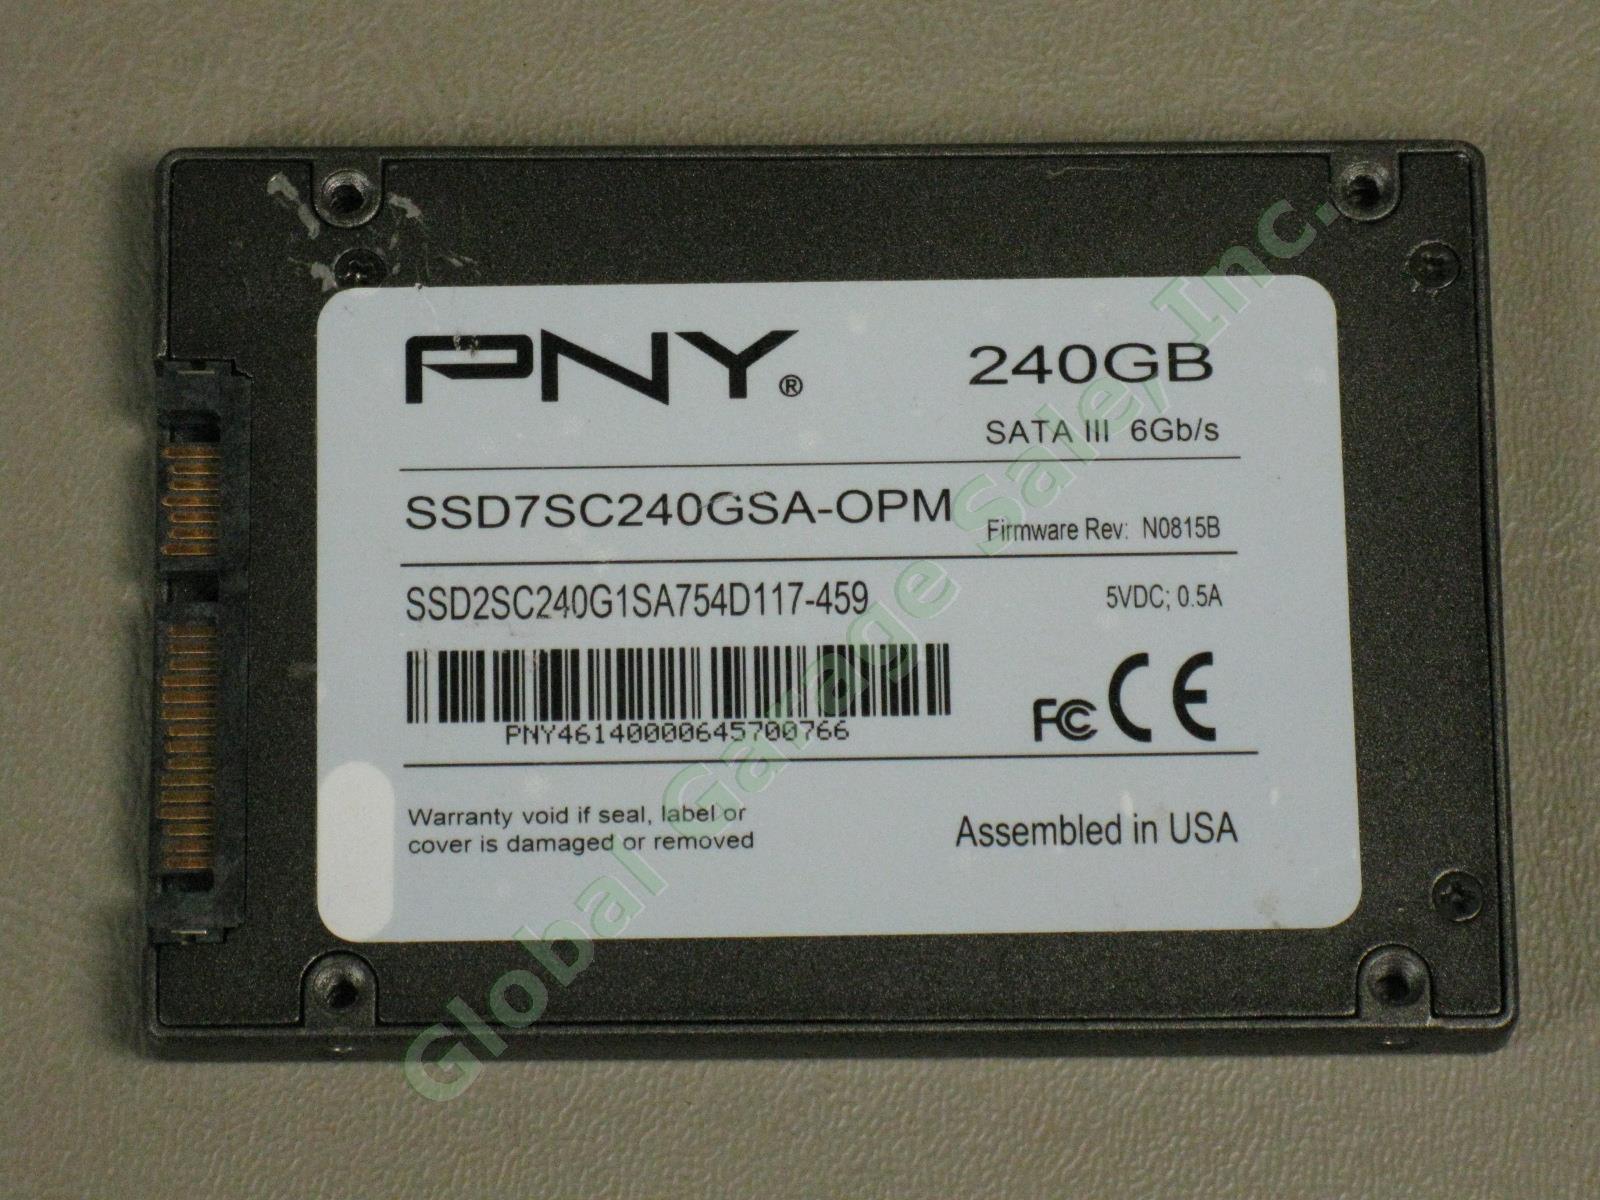 6 Laptop Drives 240GB SSD 2.5" Sandisk SDSSDA-240G PNY SSD7SC240GSA-OPM + 4 HDD 4